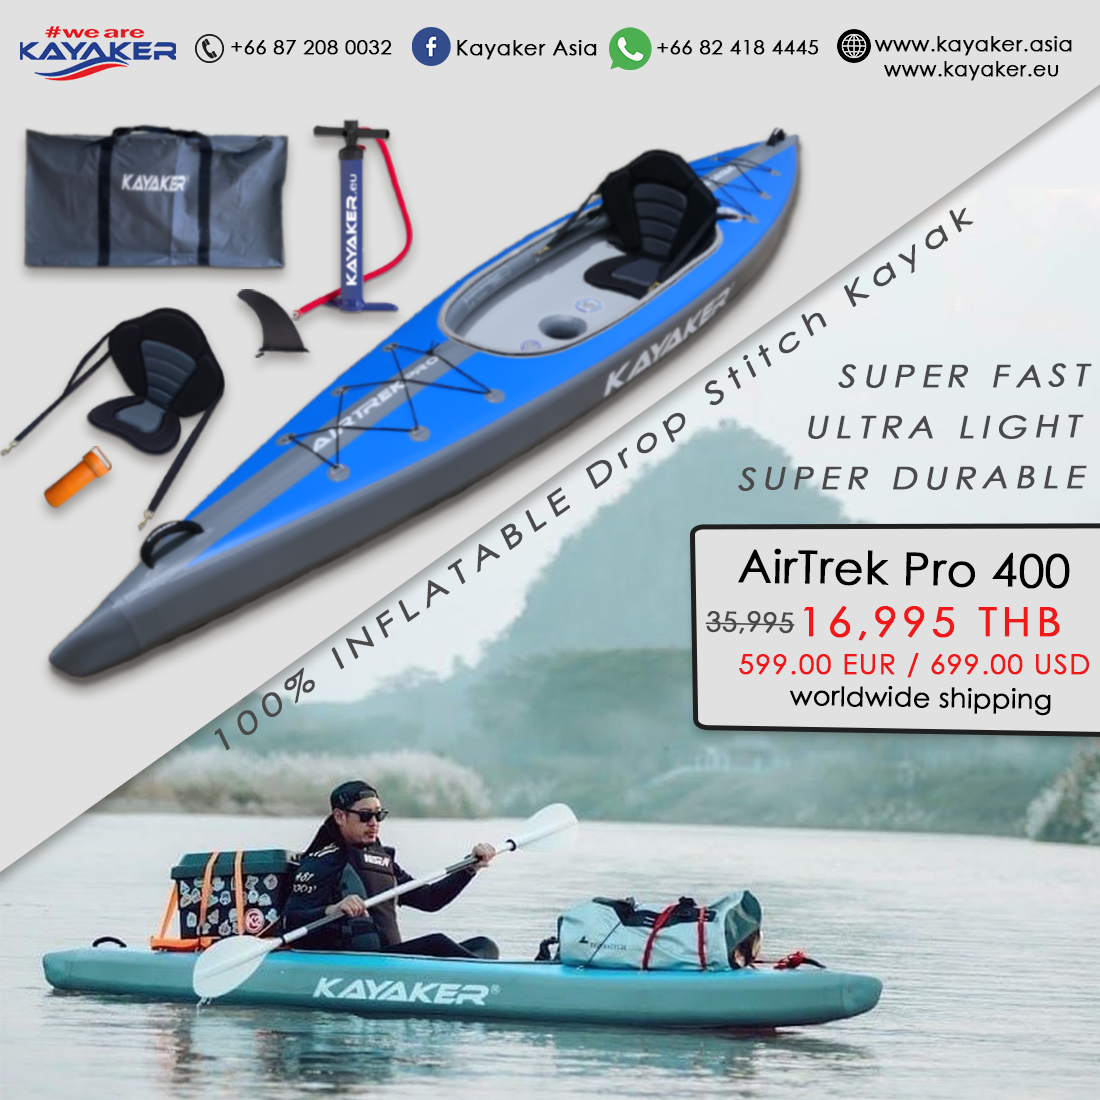 AirTrek Pro 400 Airkayak DSKayak